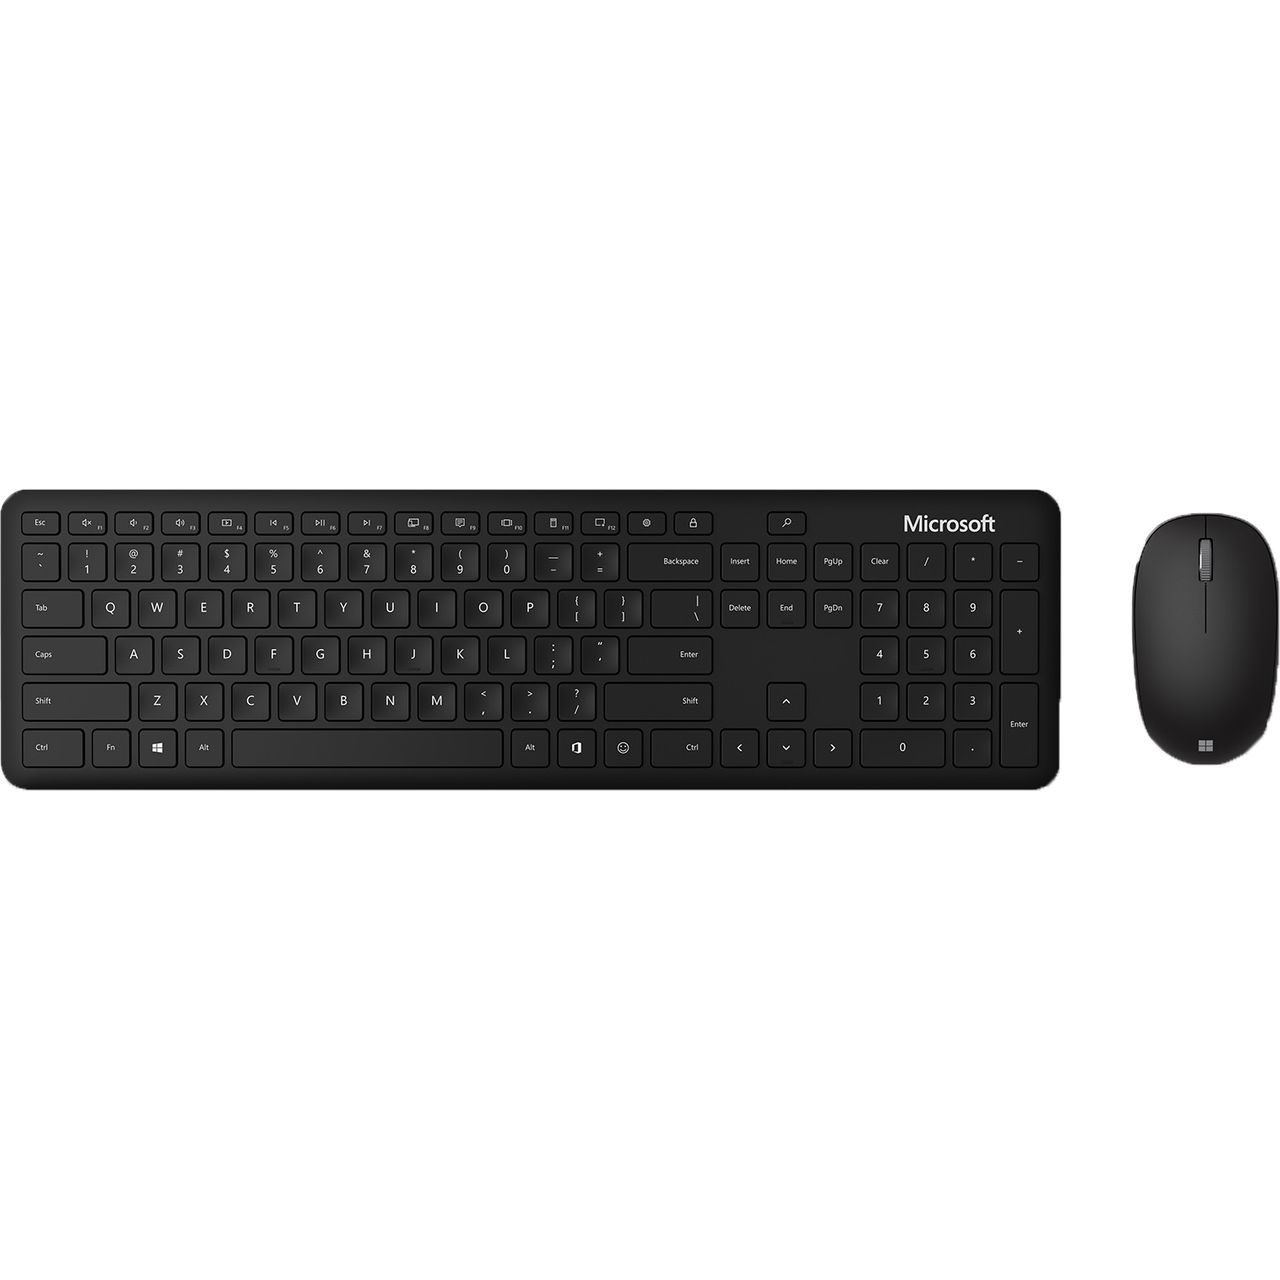 Microsoft Bluetooth Keyboard Review